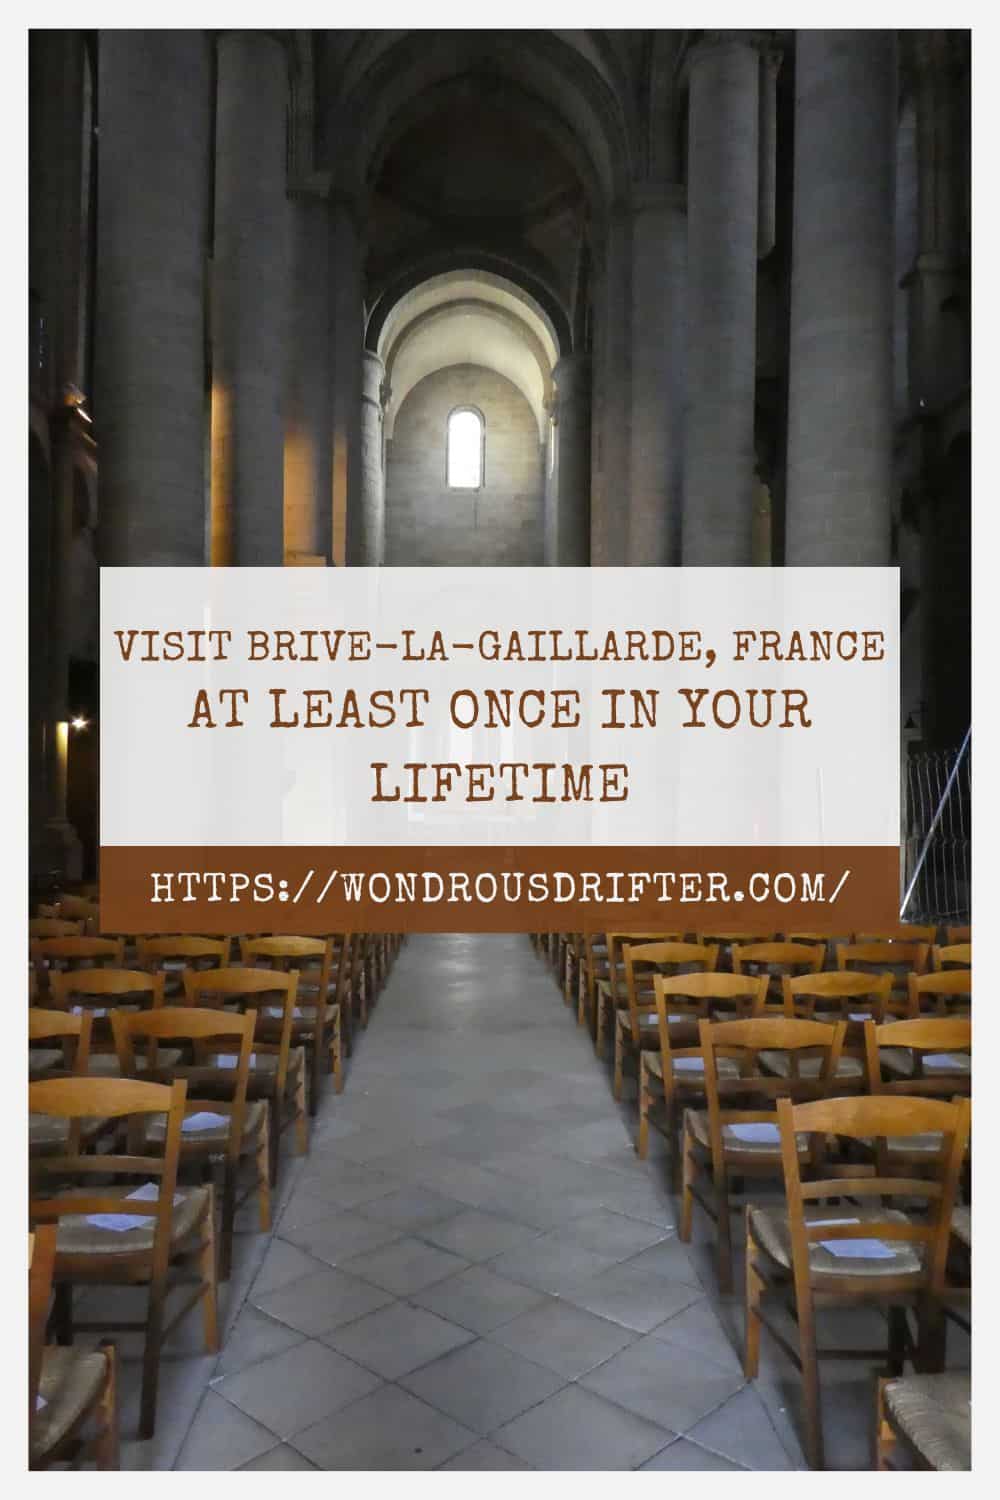 Visit Brive-la-Gaillarde France at least once in your lifetime